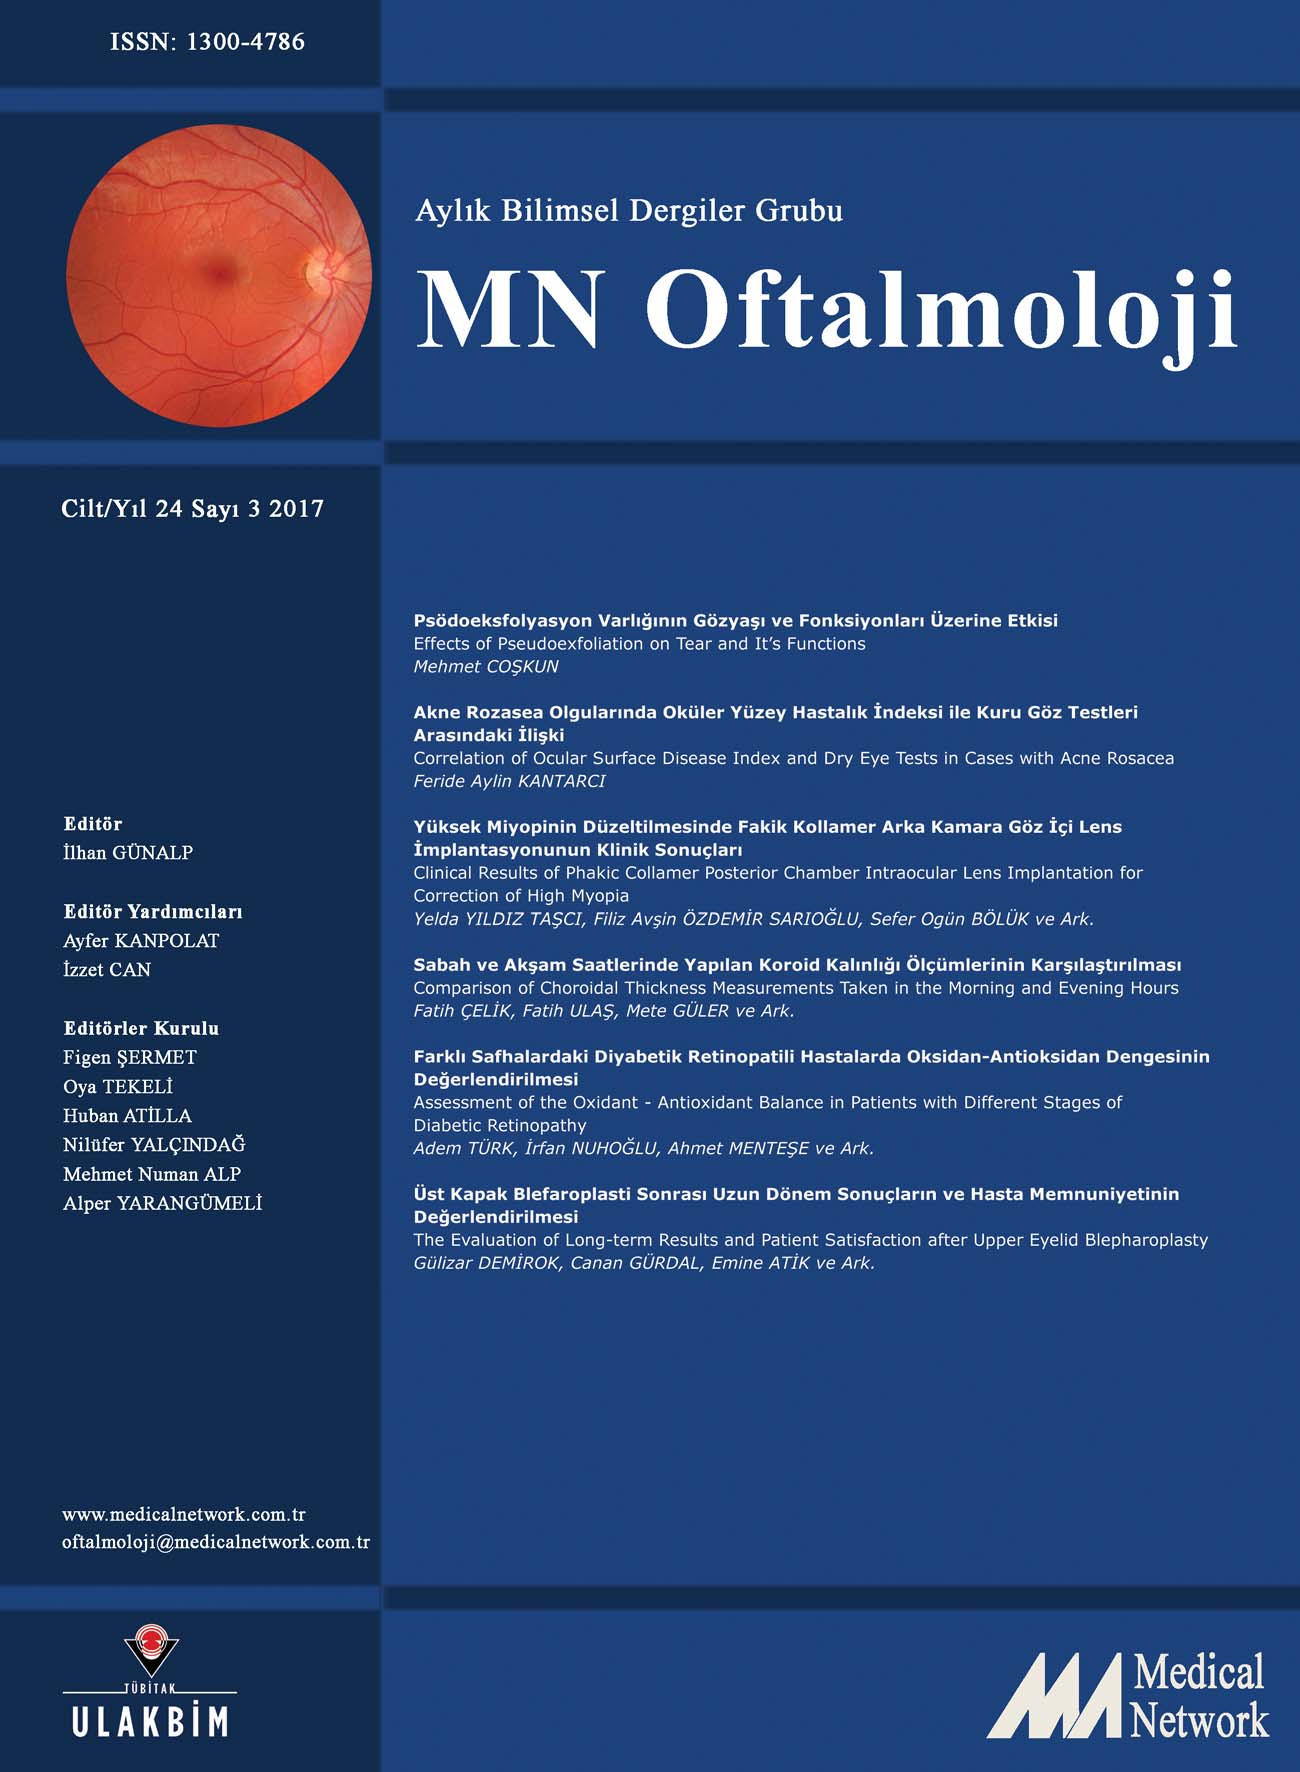 <p>MN Oftalmoloji Cilt: 24 Say: 3 2017 (MN Ophthalmology Volume: 24 No 3 2017)</p>